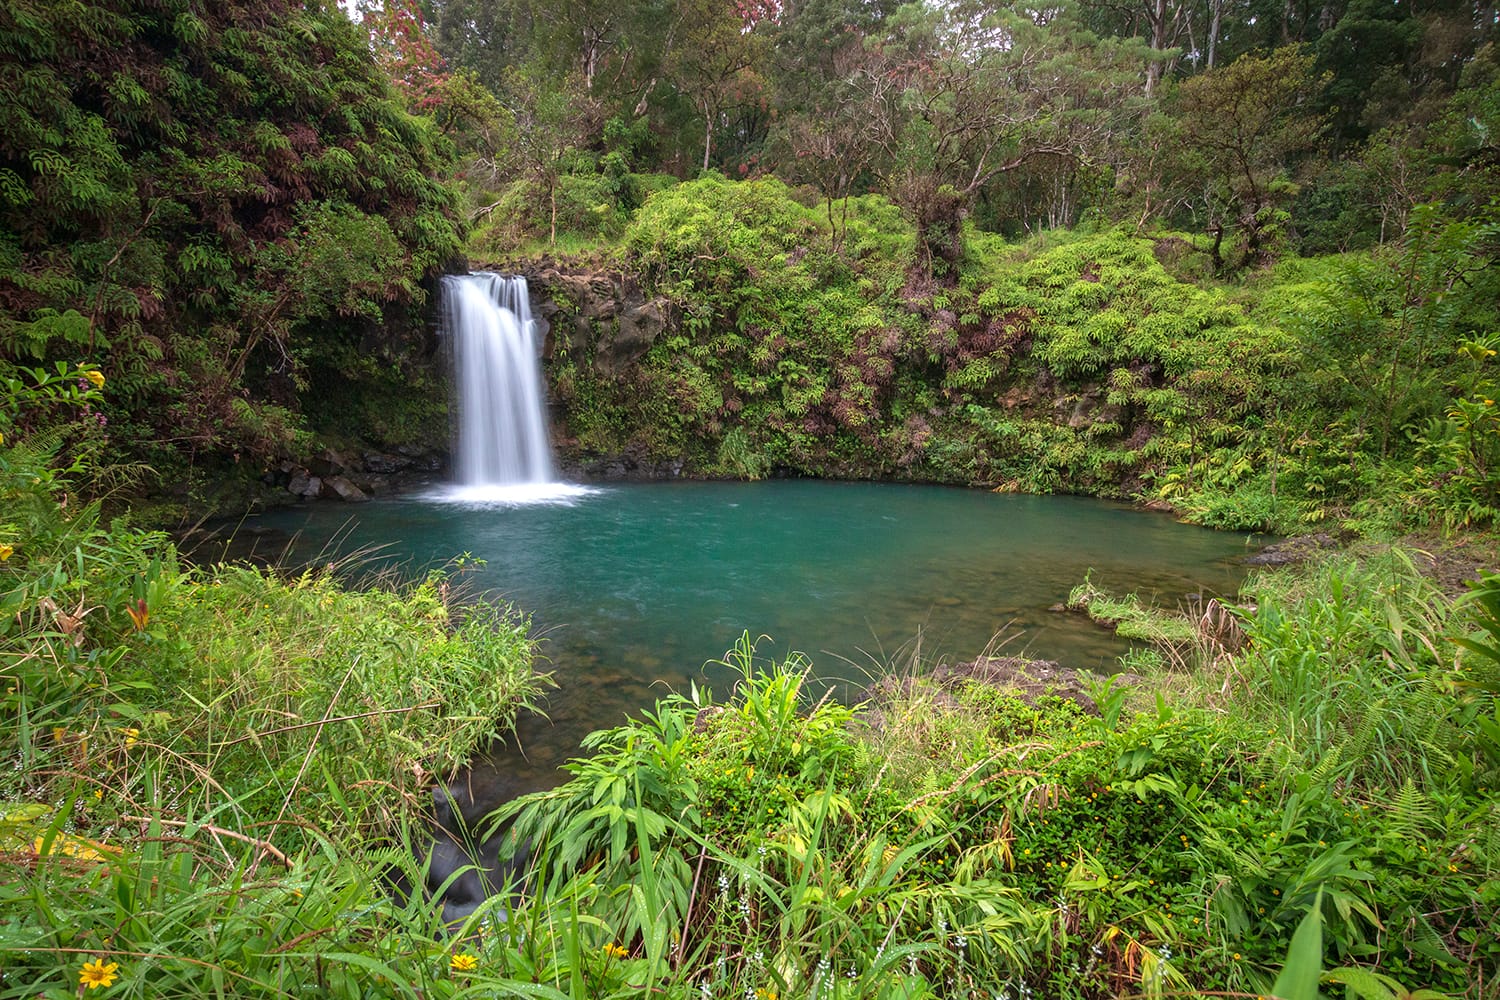 Puaa Kaa Falls (Pua'a Ka'a Falls) on the Hawaiian island of Maui at Mile 22 along the Road to Hana